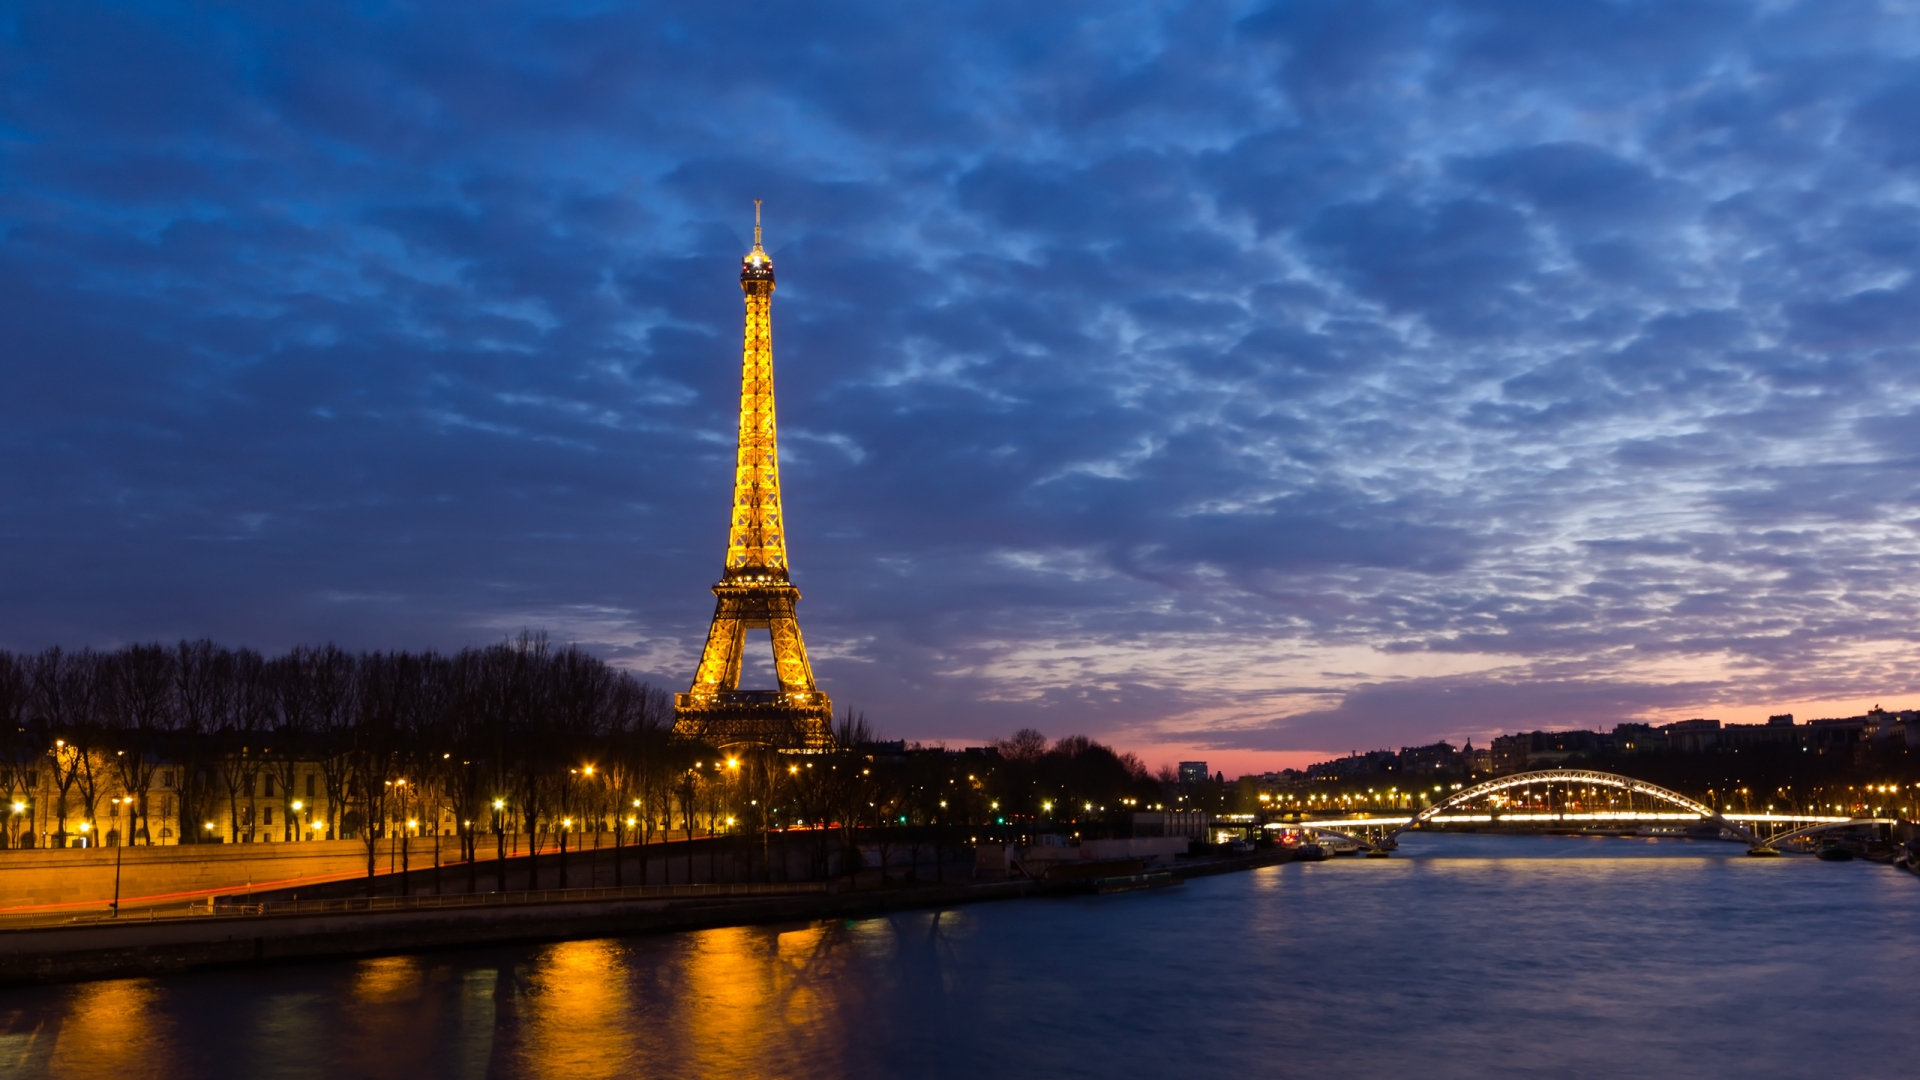 Eiffel Tower Sunset for 1920 x 1080 HDTV 1080p resolution